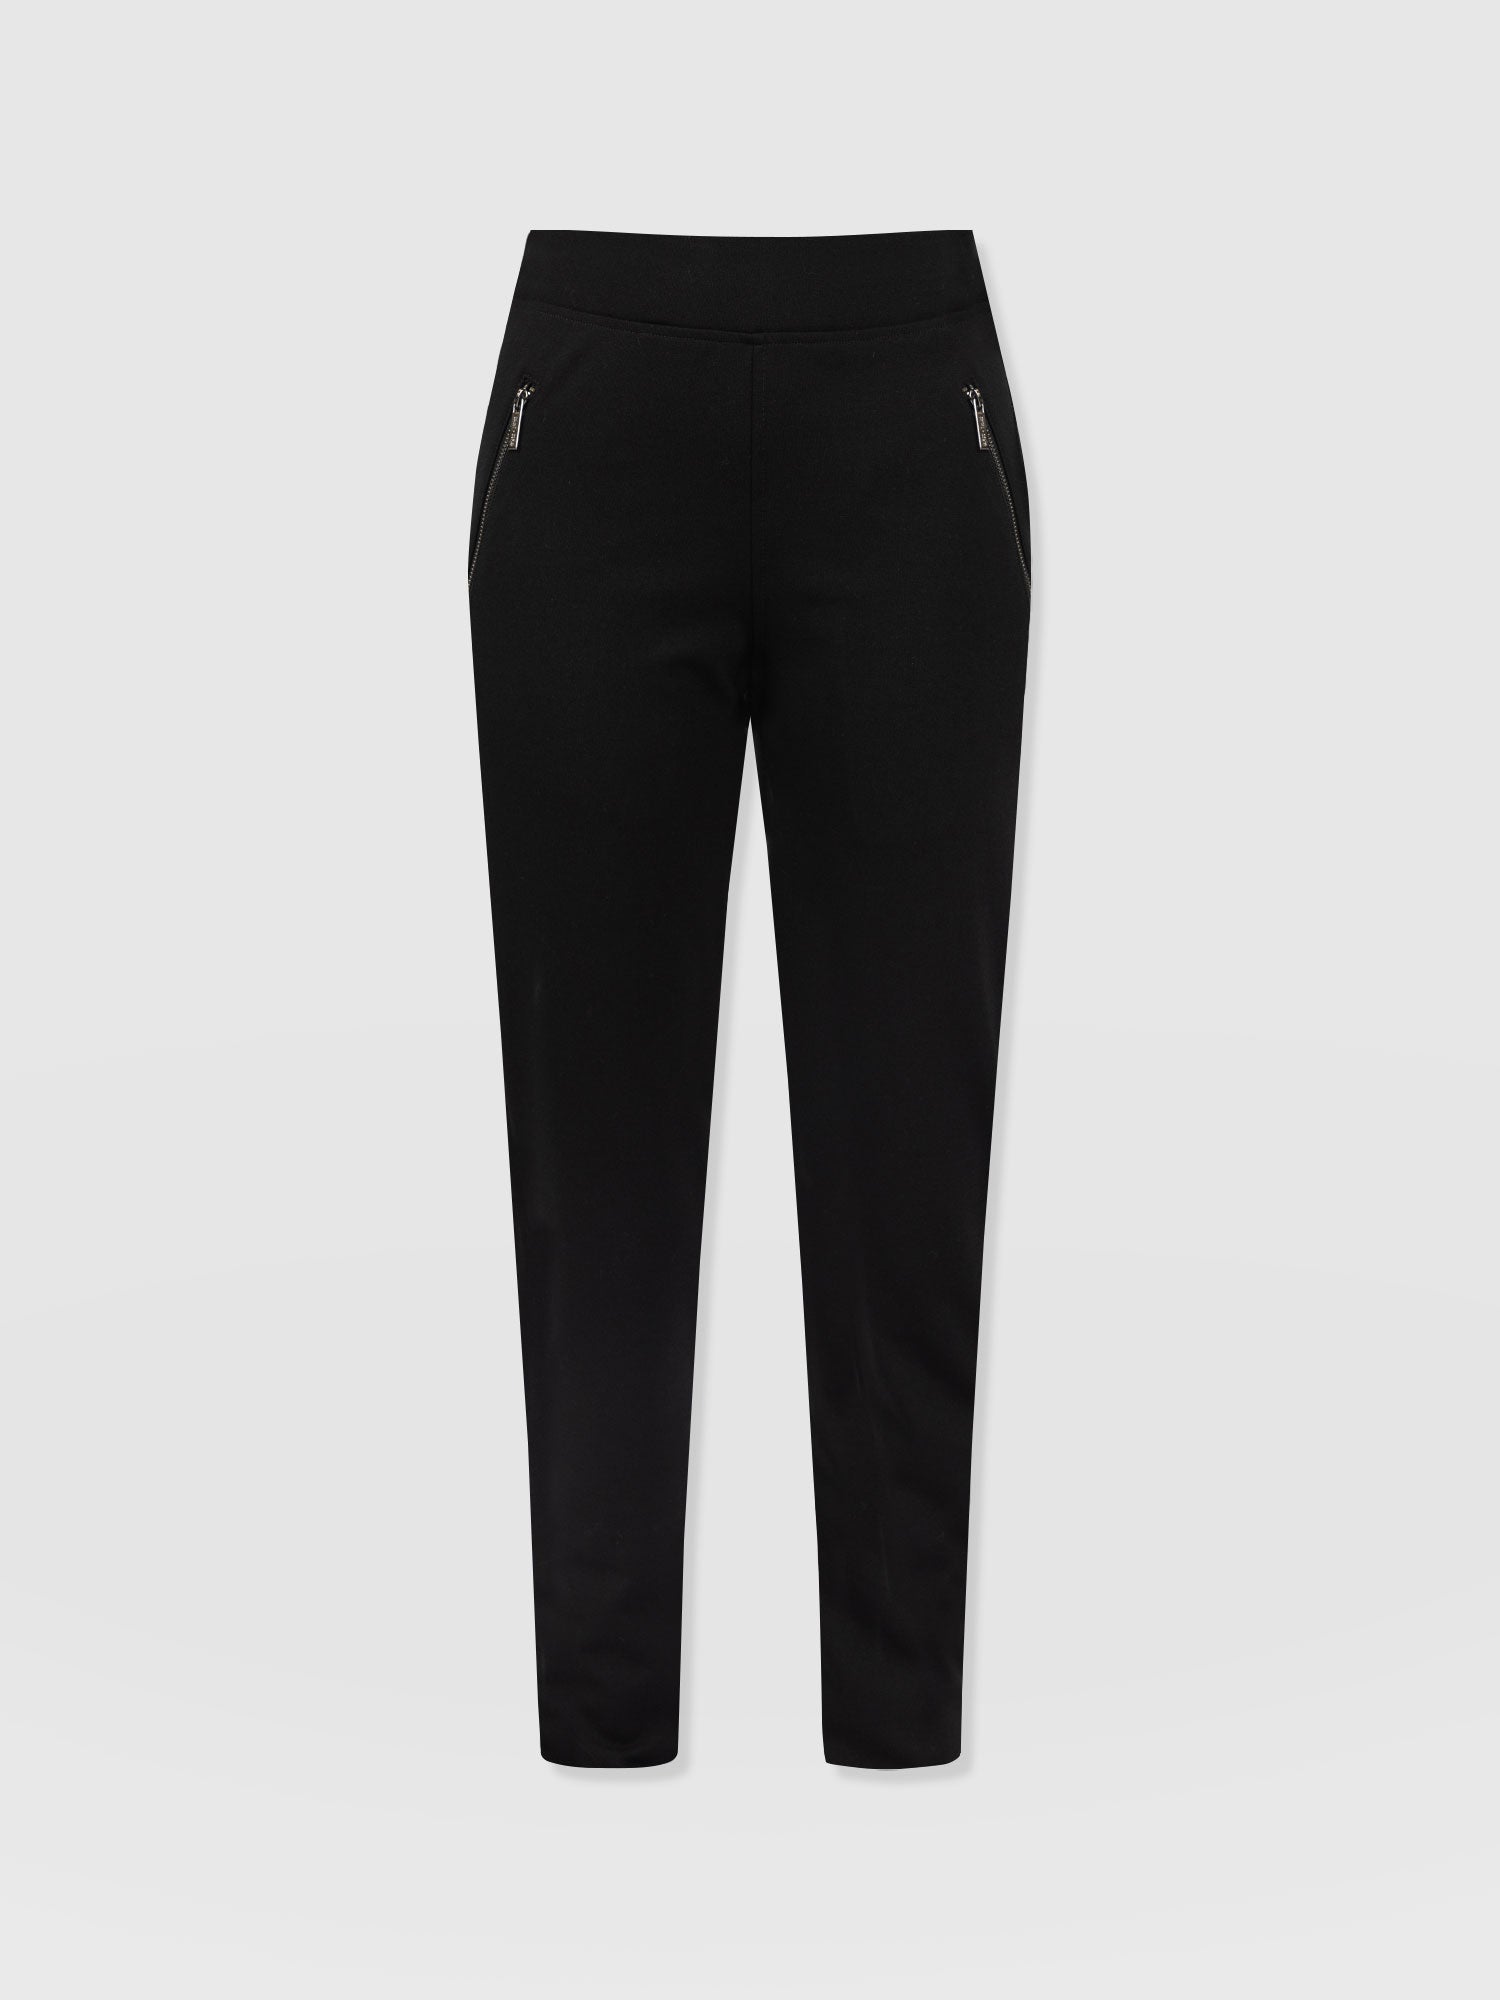 finsbury zip pant black women s trousers saint sofia usa 34889120743601